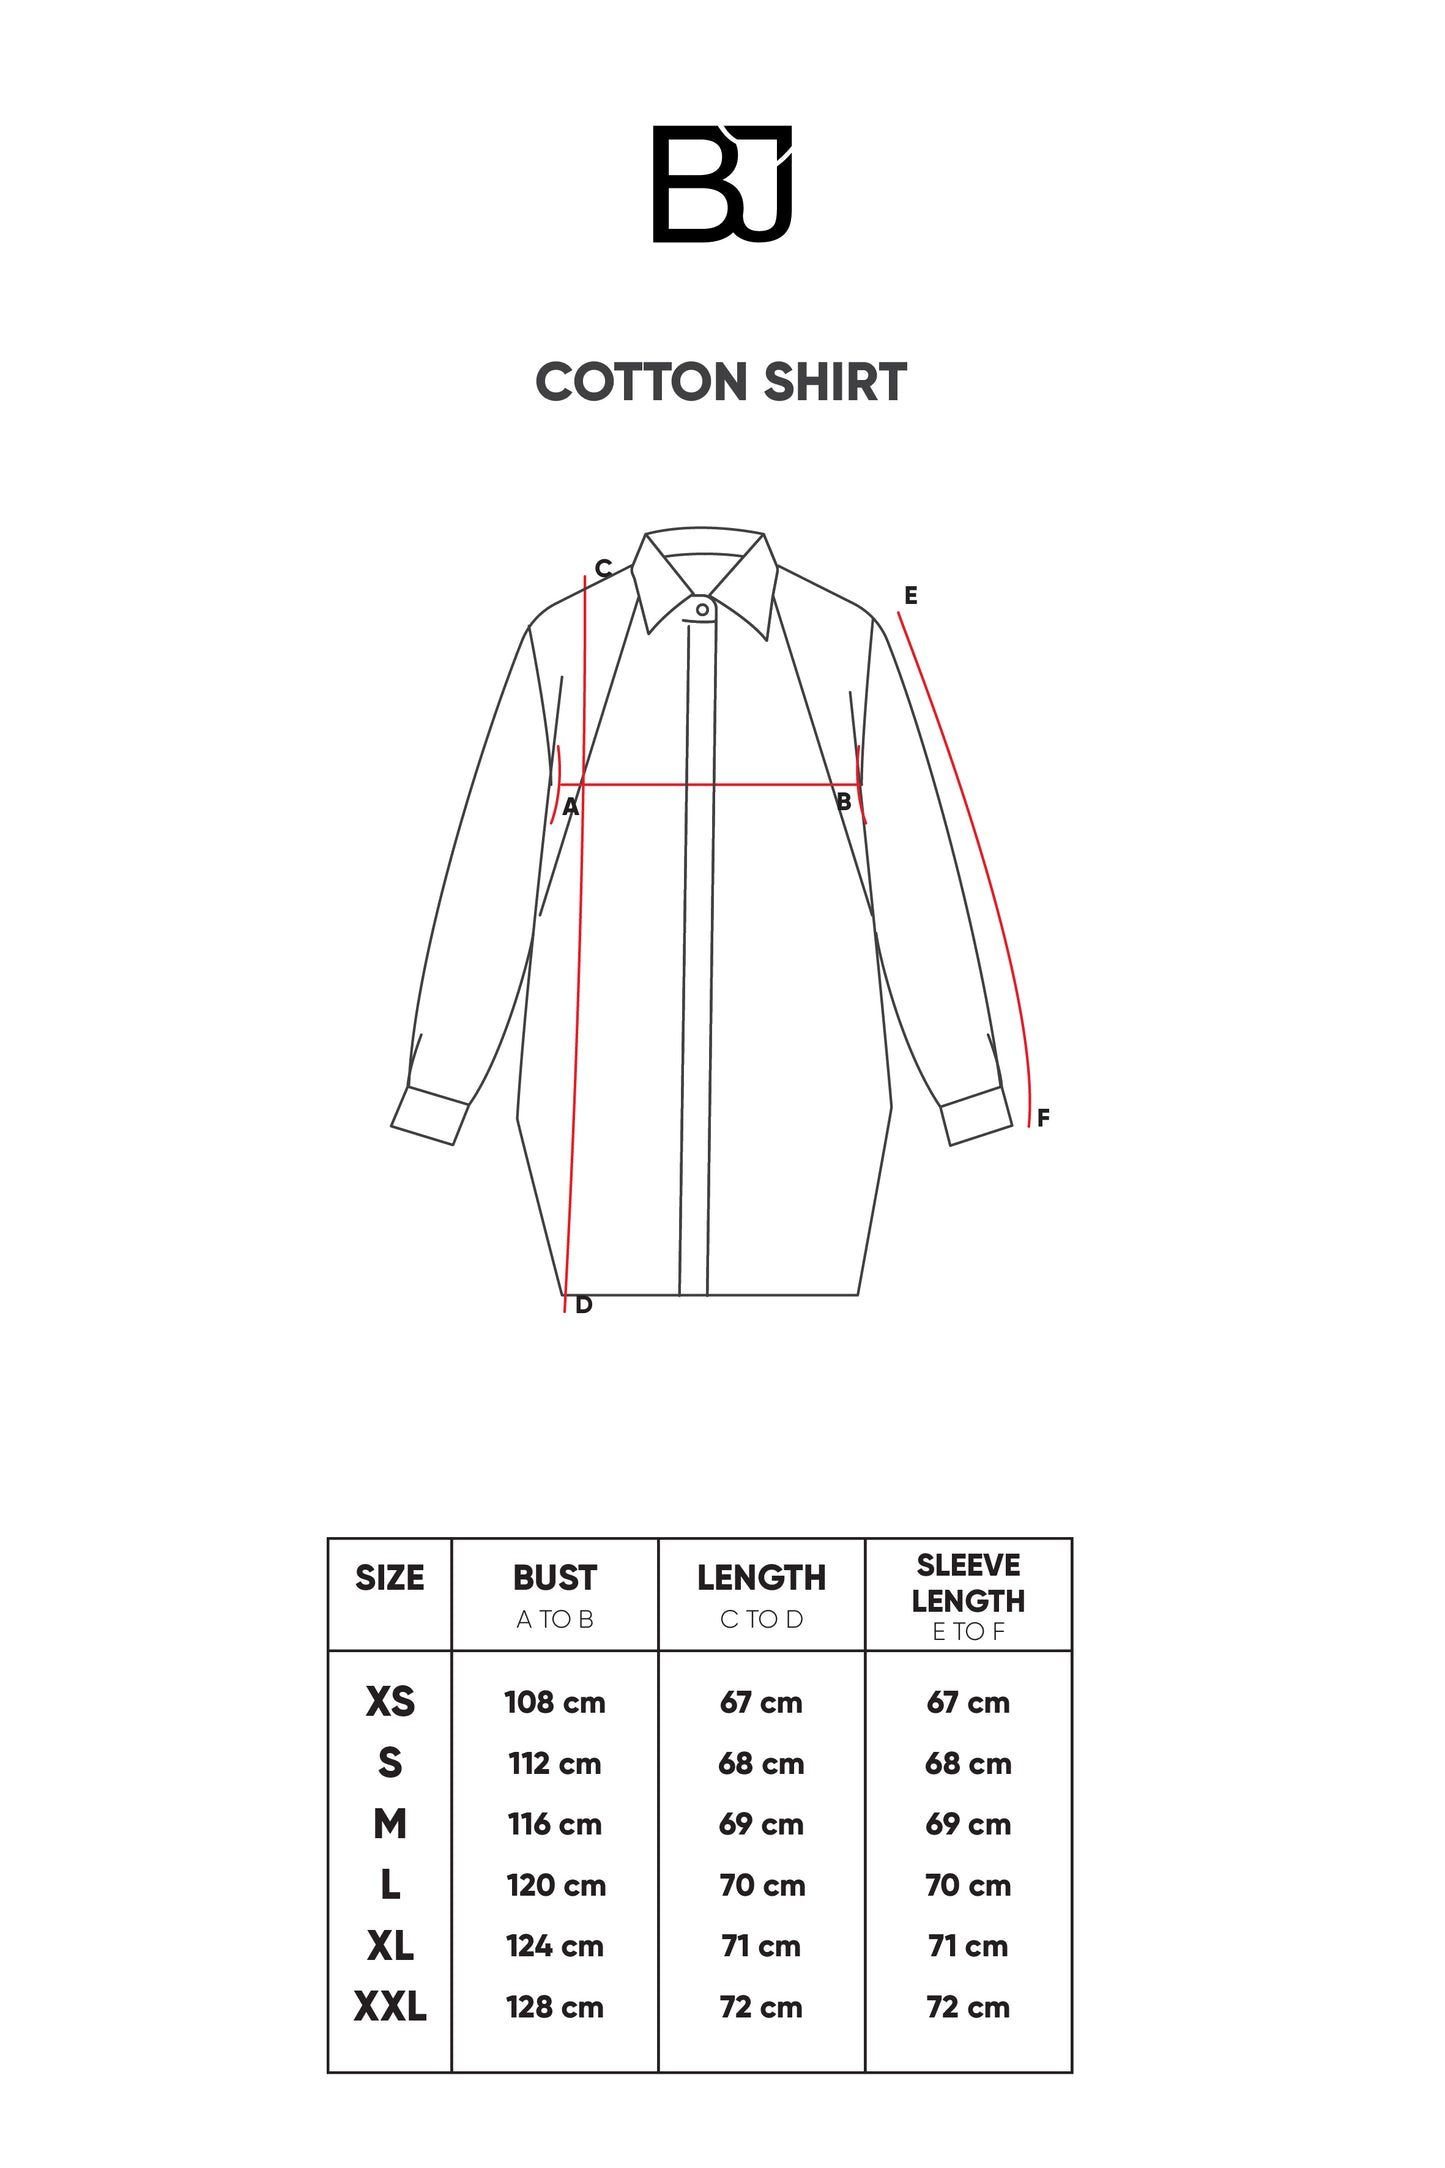 Cotton Shirt - White